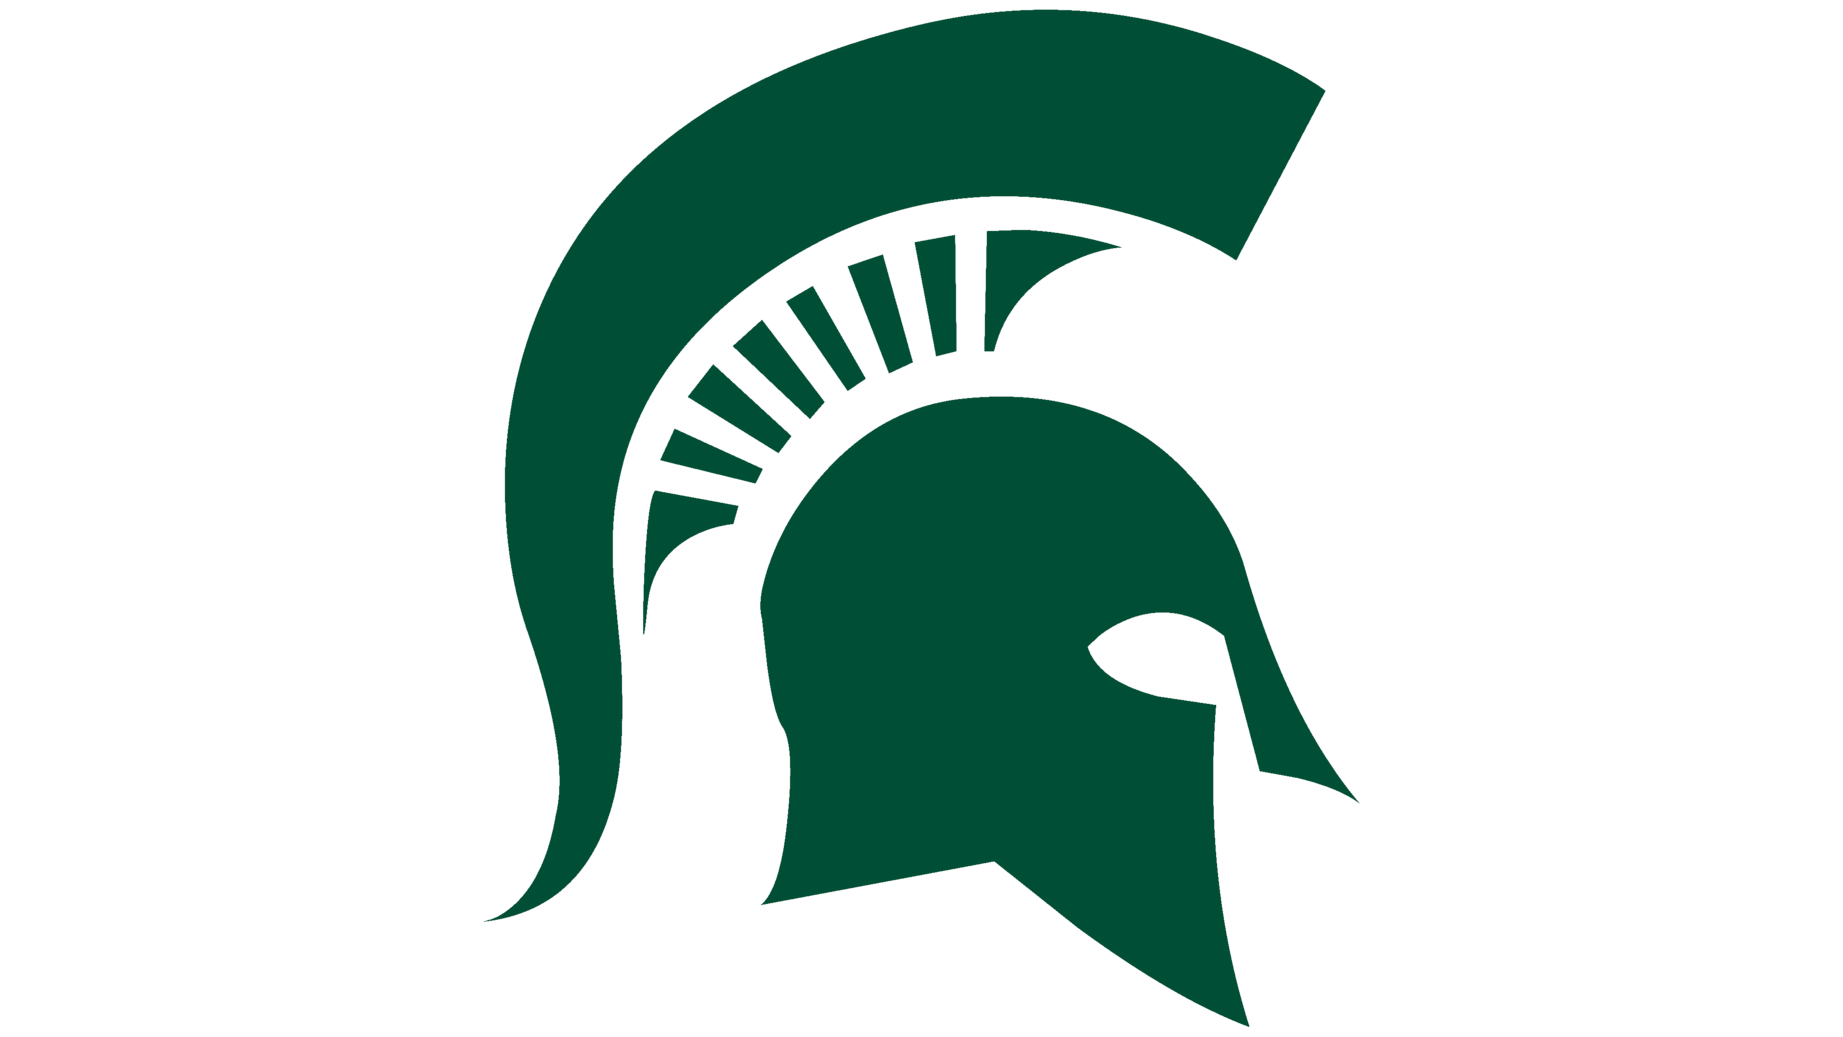 Michigan state logo